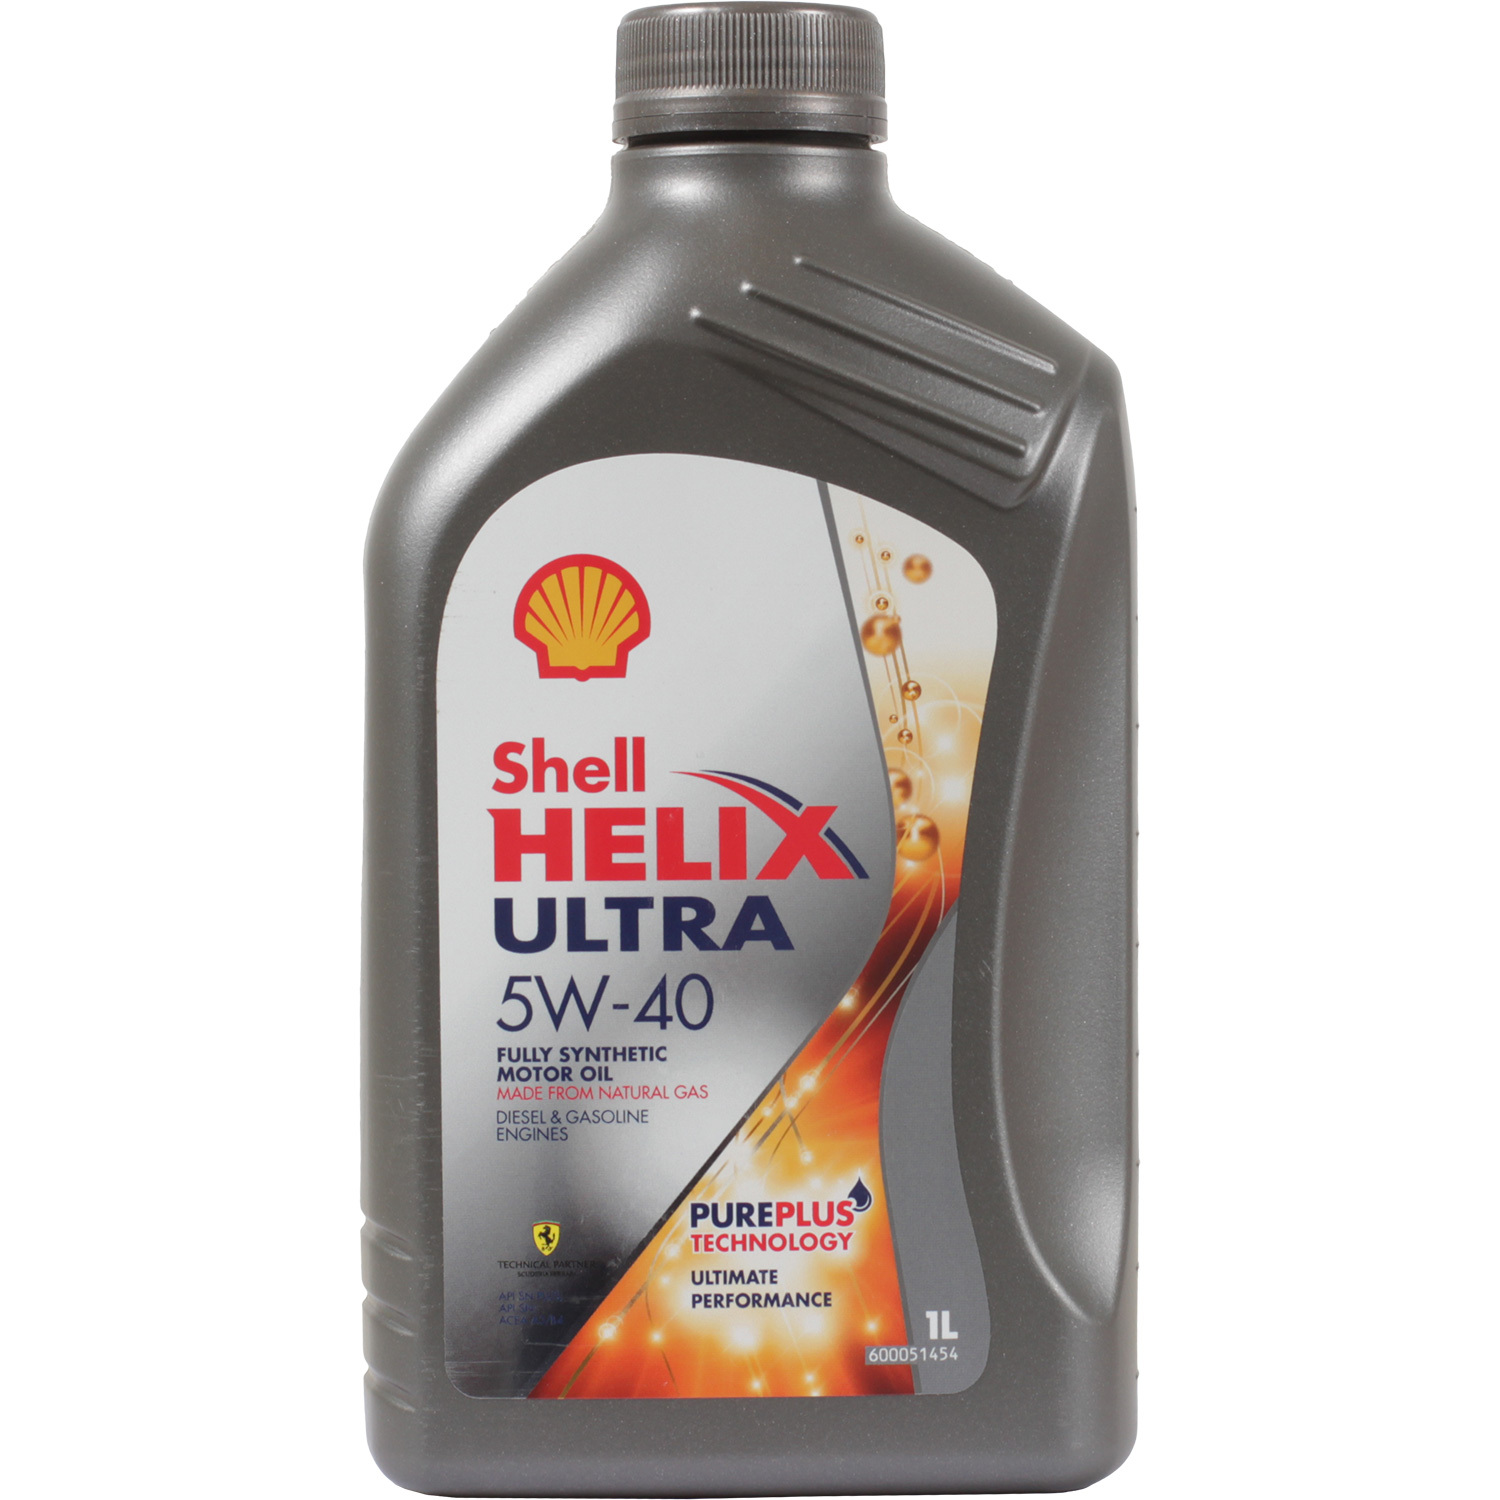 Shell Моторное масло Shell Helix Ultra 5W-40, 1 л shell моторное масло shell helix hx8 5w 30 1 л